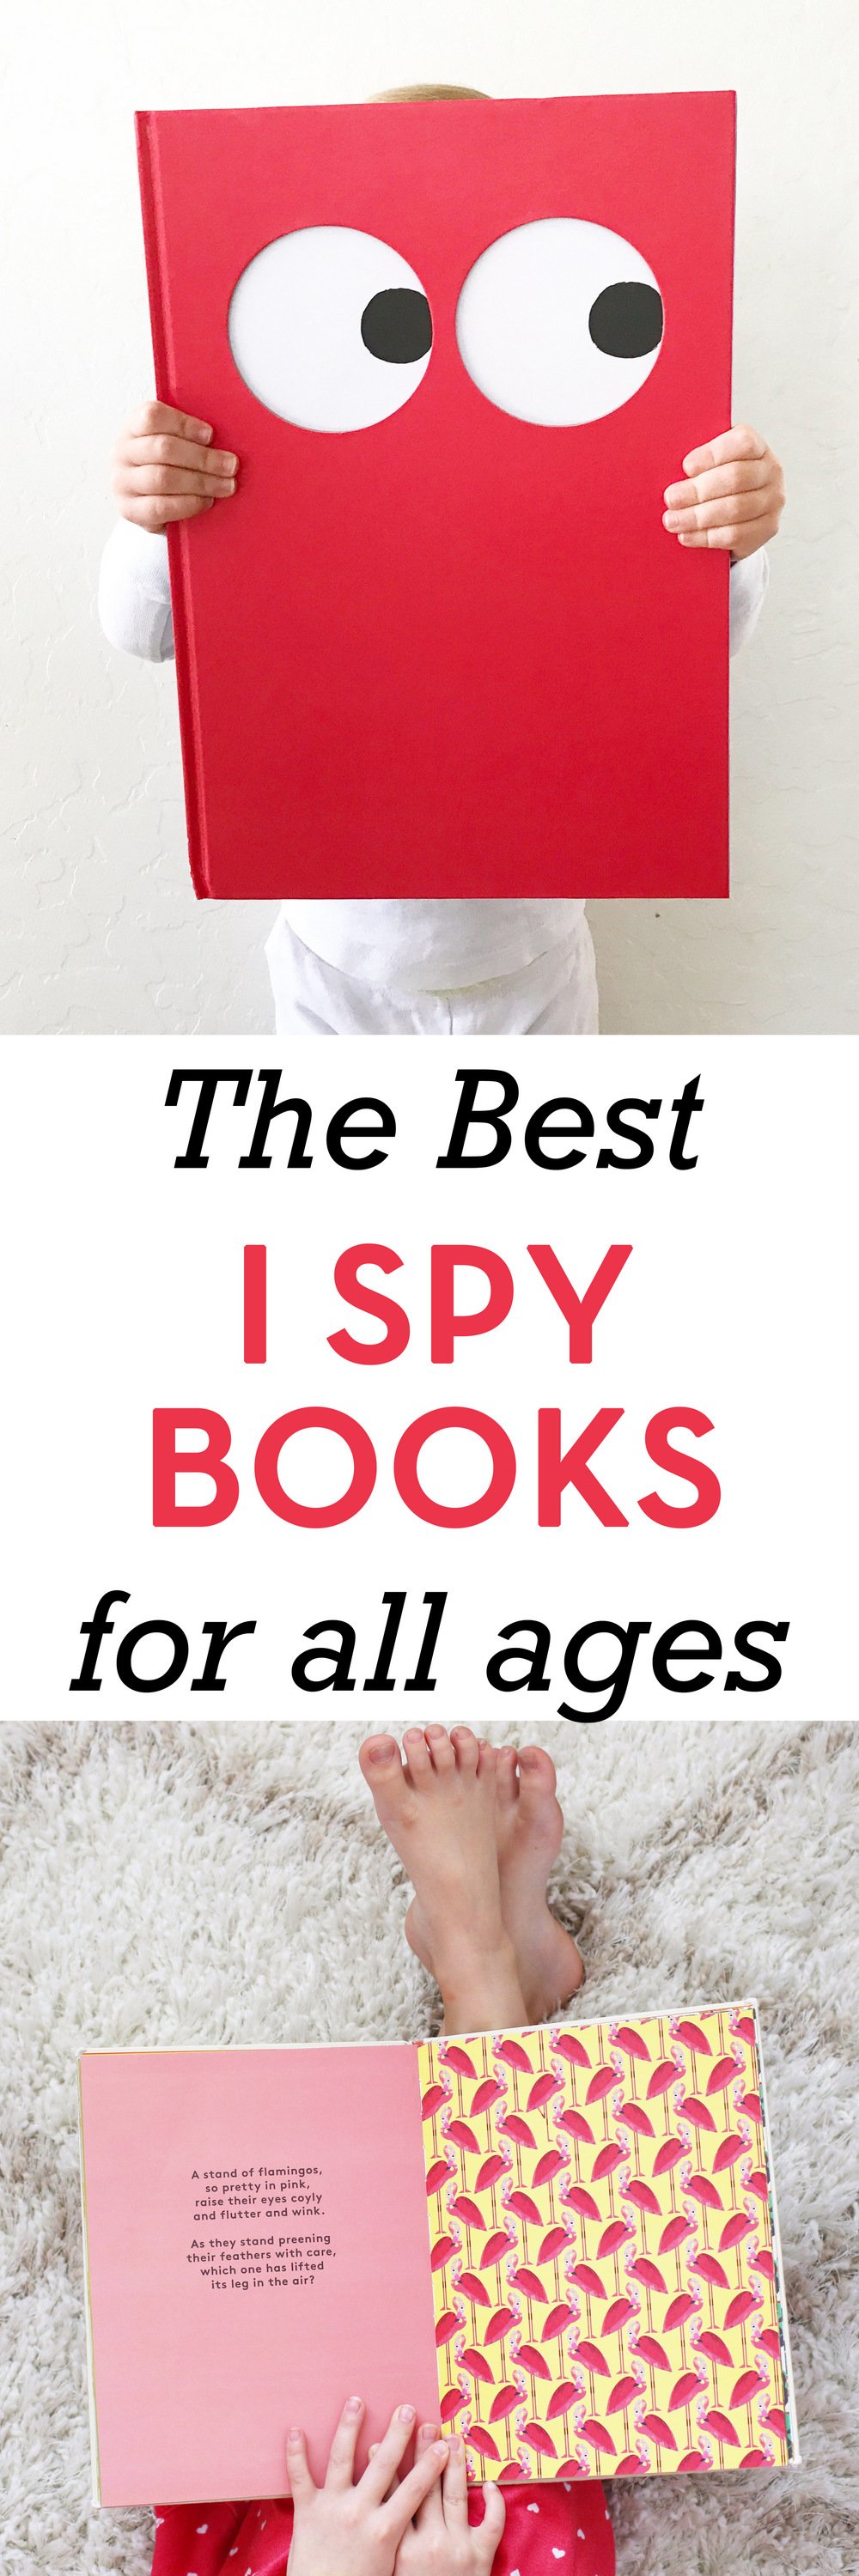 best I spy books